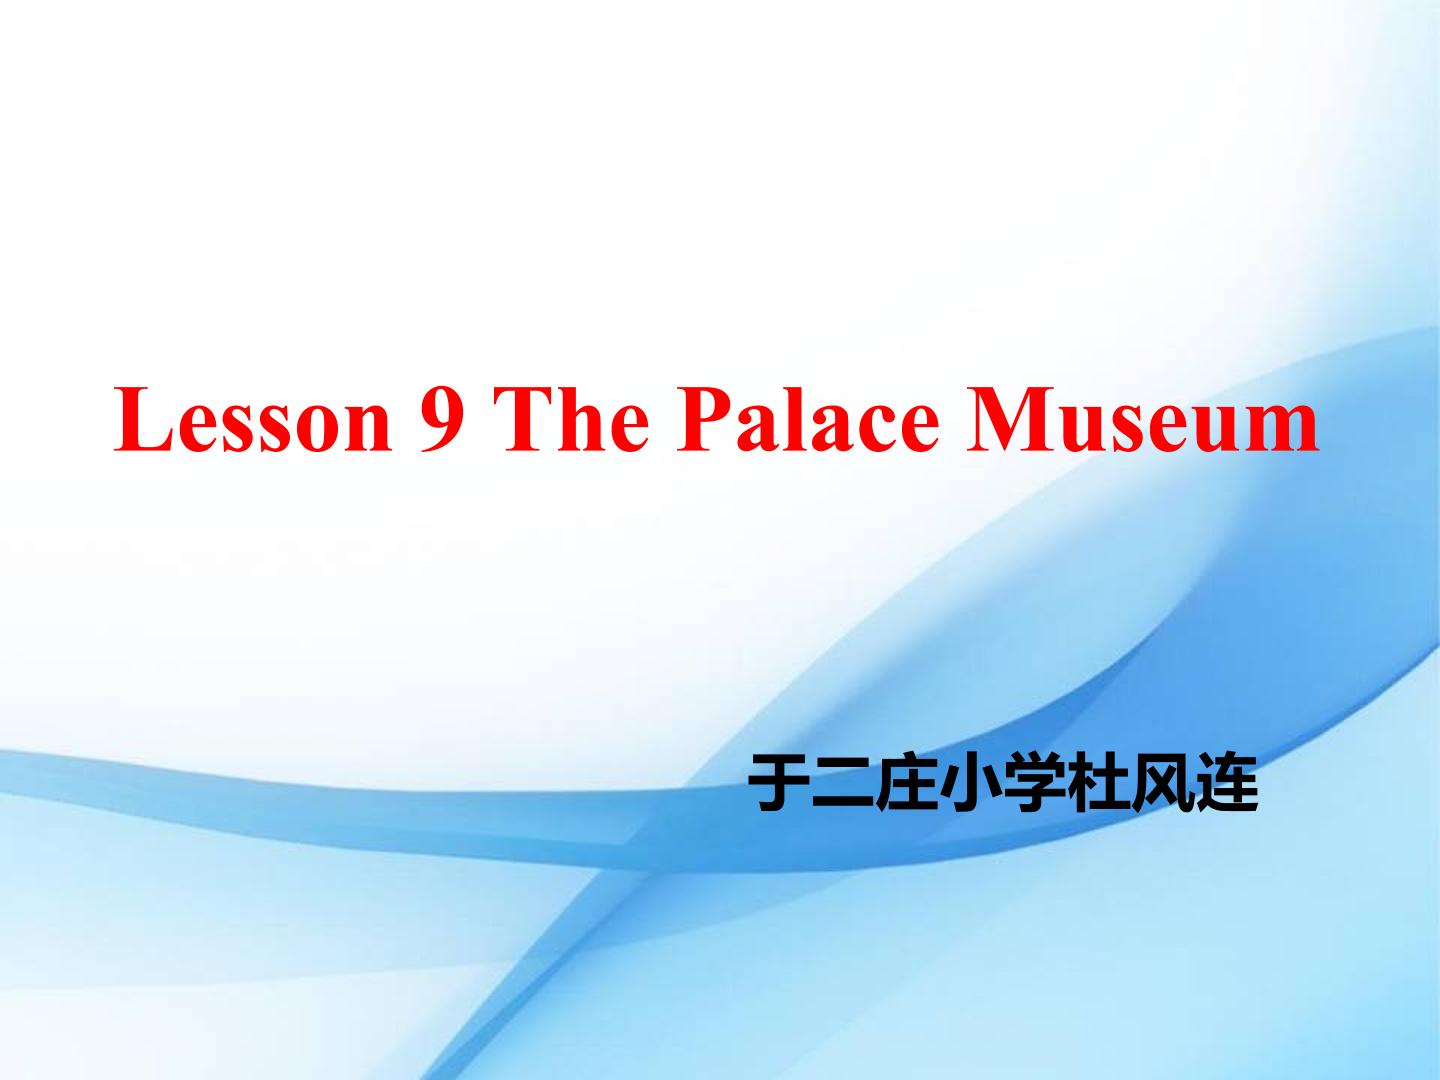 The Palace Musem